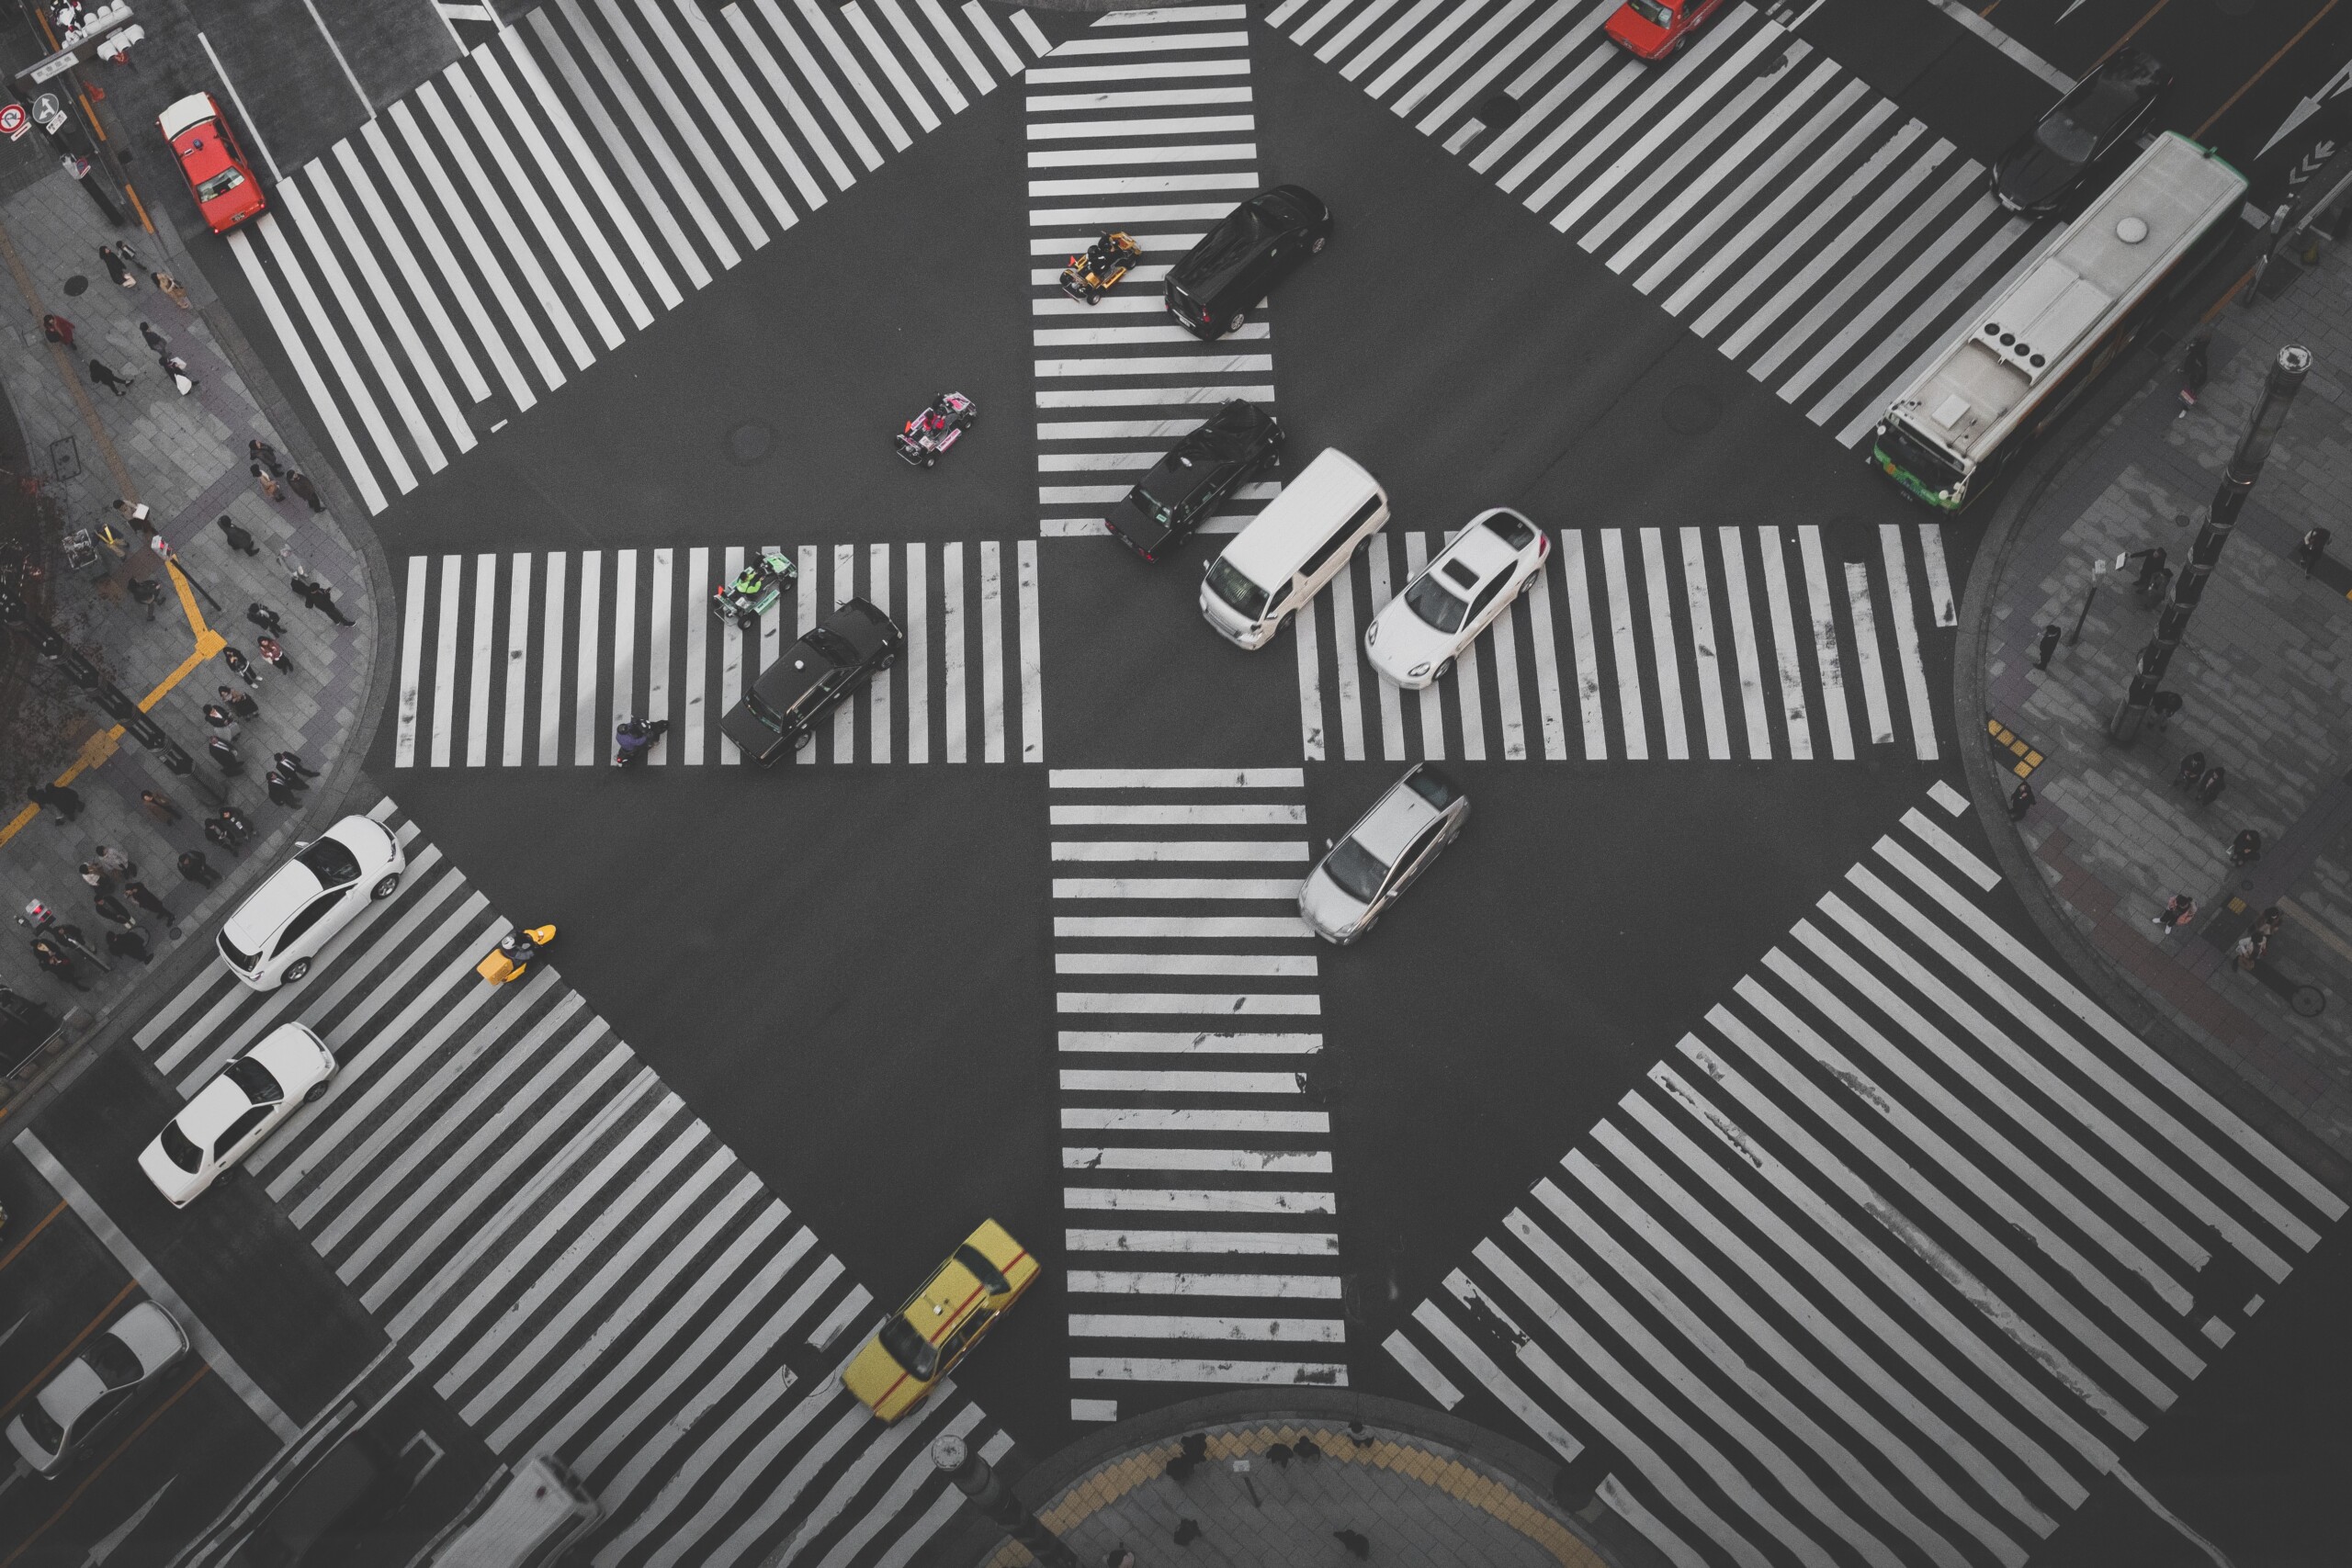 Diagonal crossing in an inner city environment